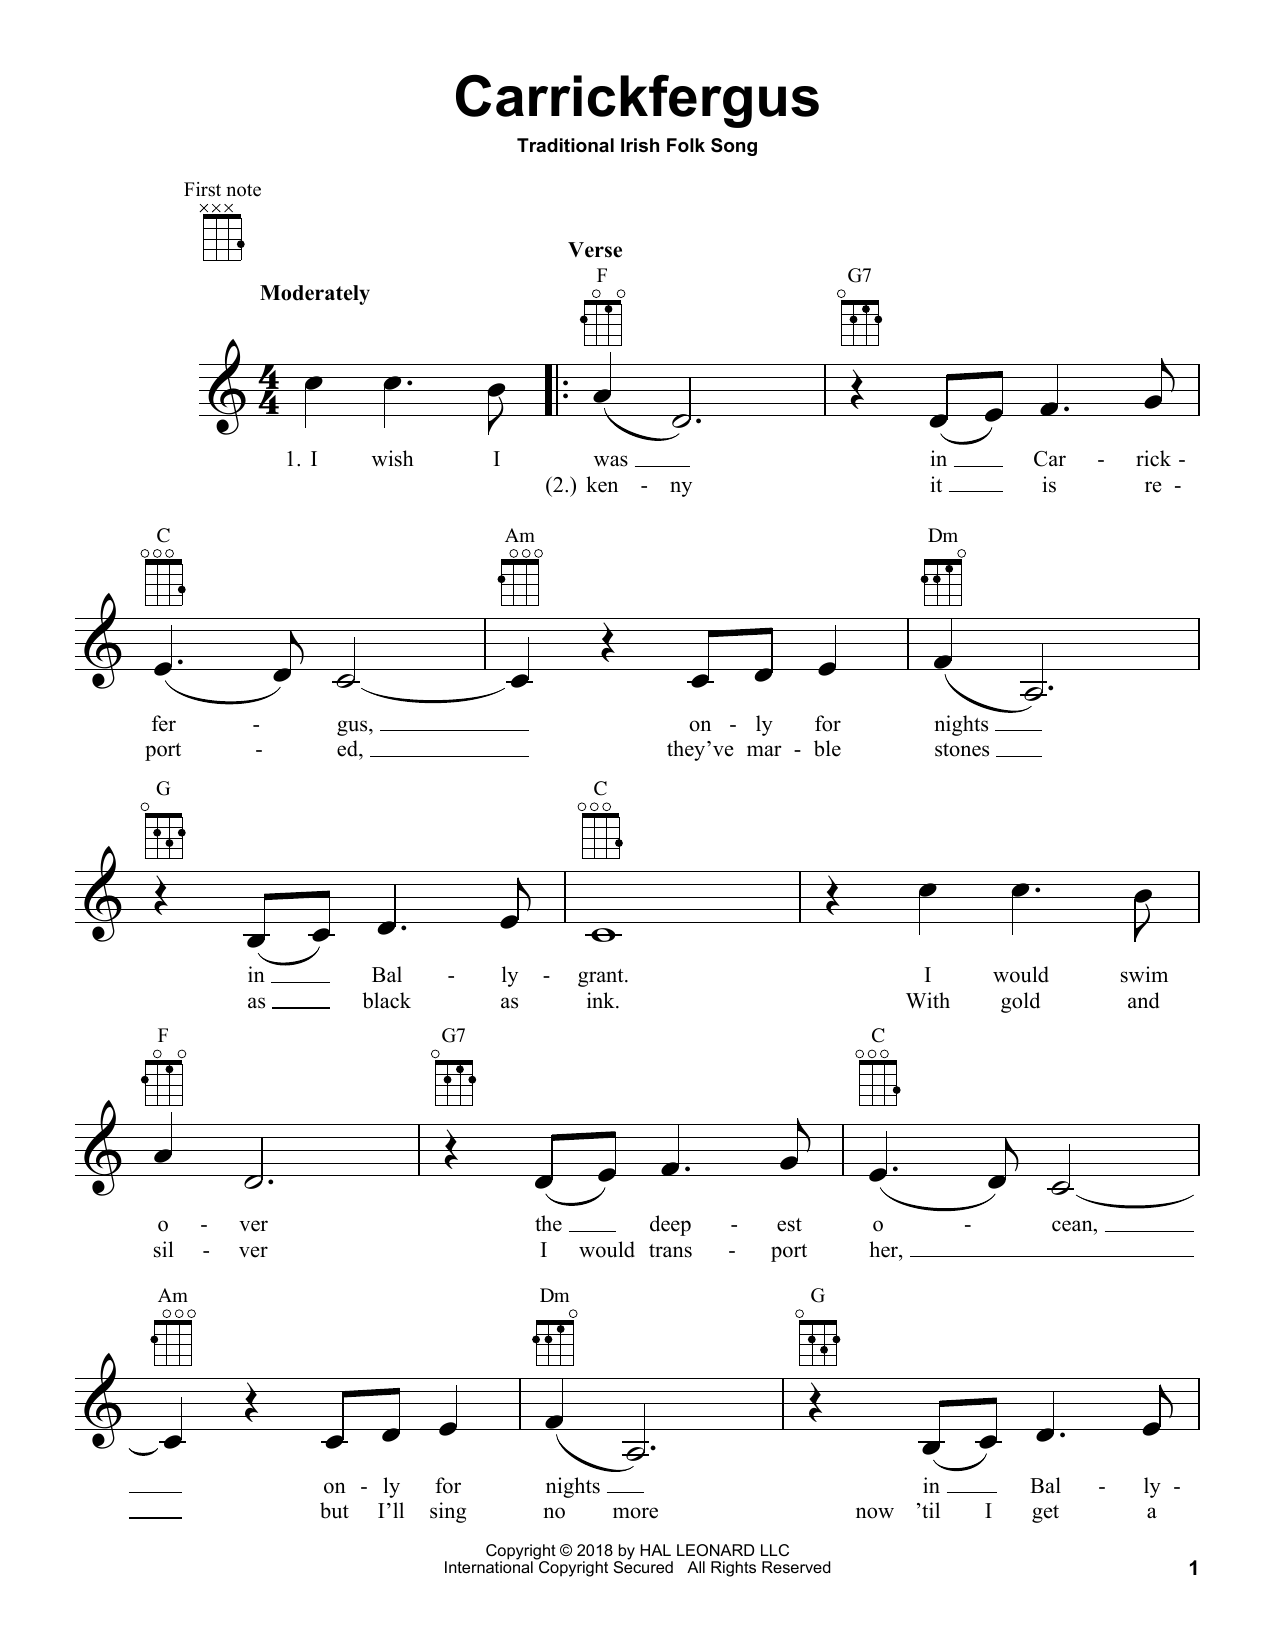 Download Traditional Irish Folk Song Carrickfergus Sheet Music